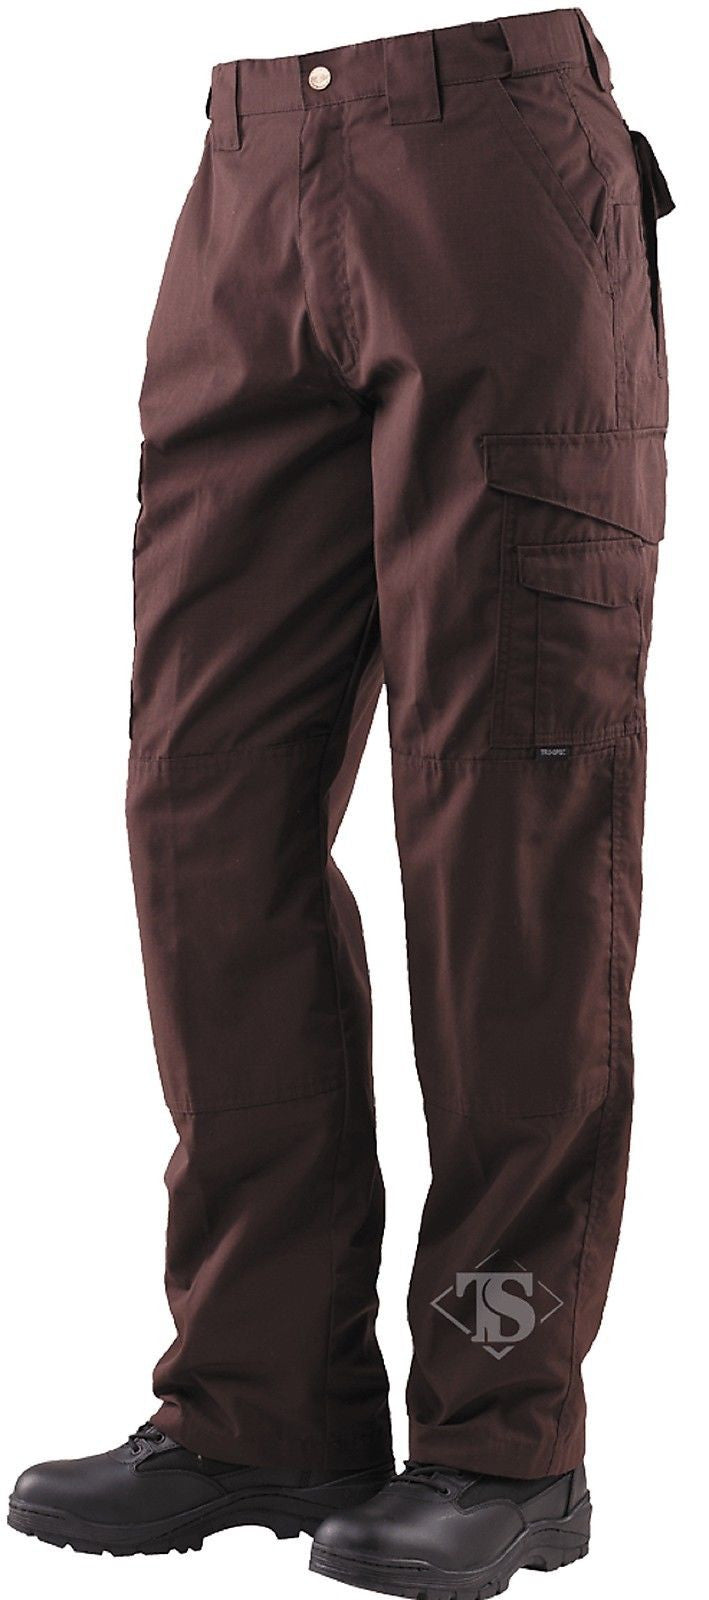 Tru-Spec 24-7 Series Tactical Pants - Men's Field-Duty Teflon Coated Cargo Pants